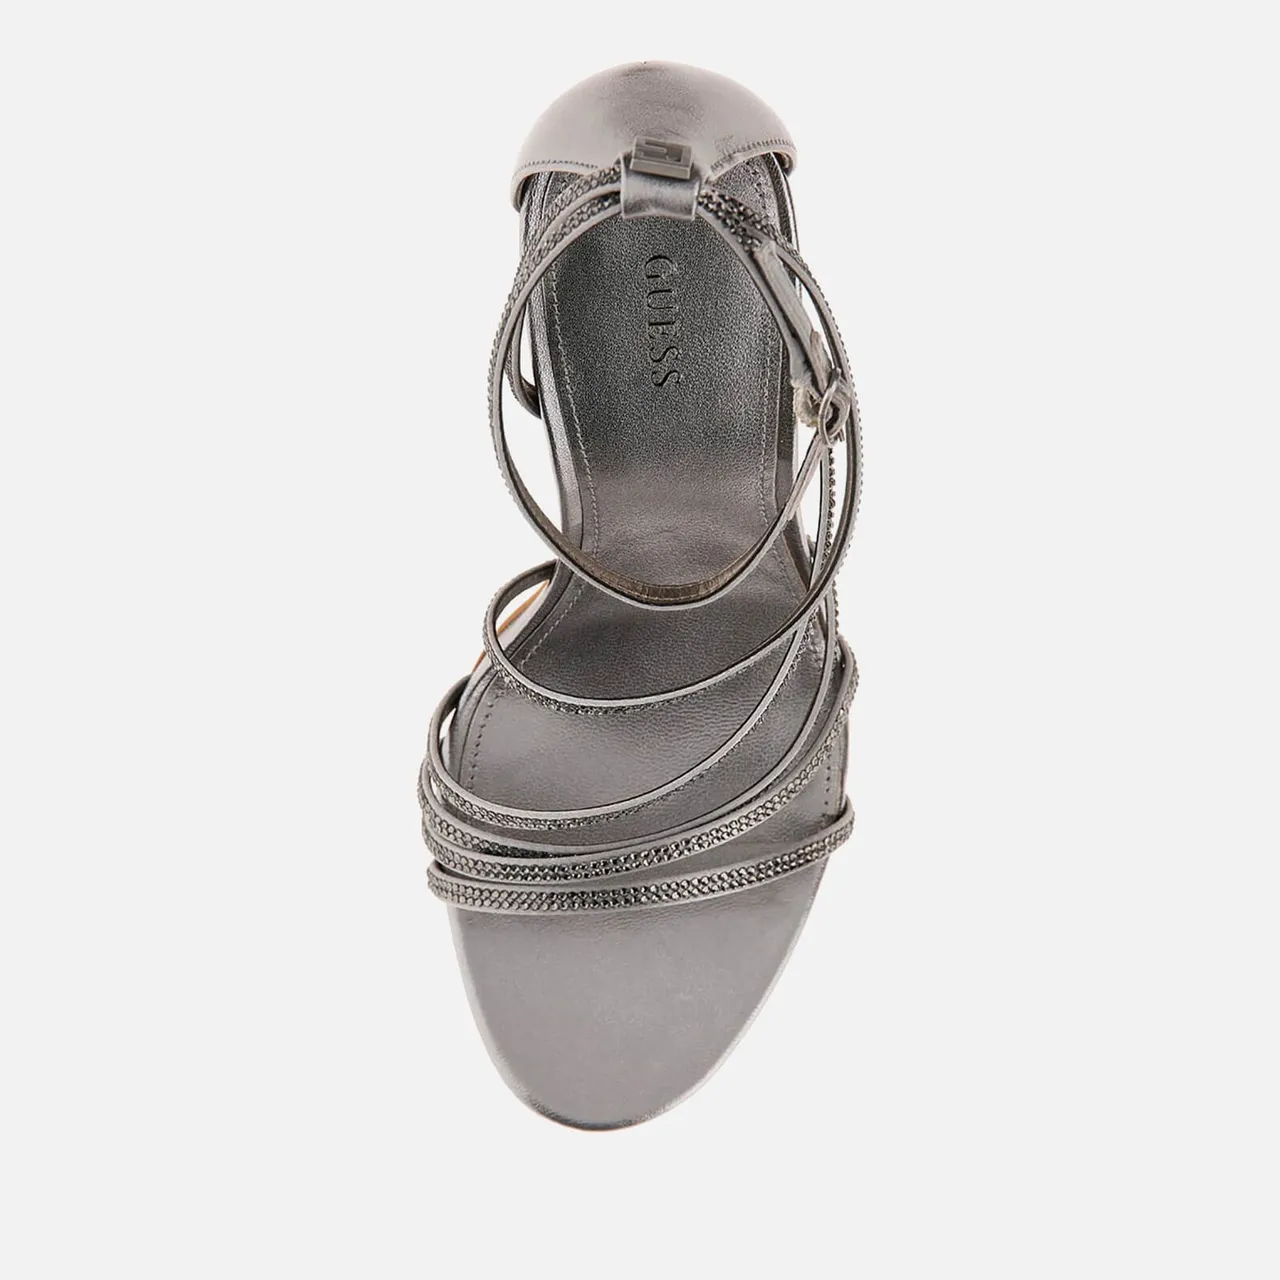 Guess Women's Axen 2 Embellished Satin Heeled Sandals